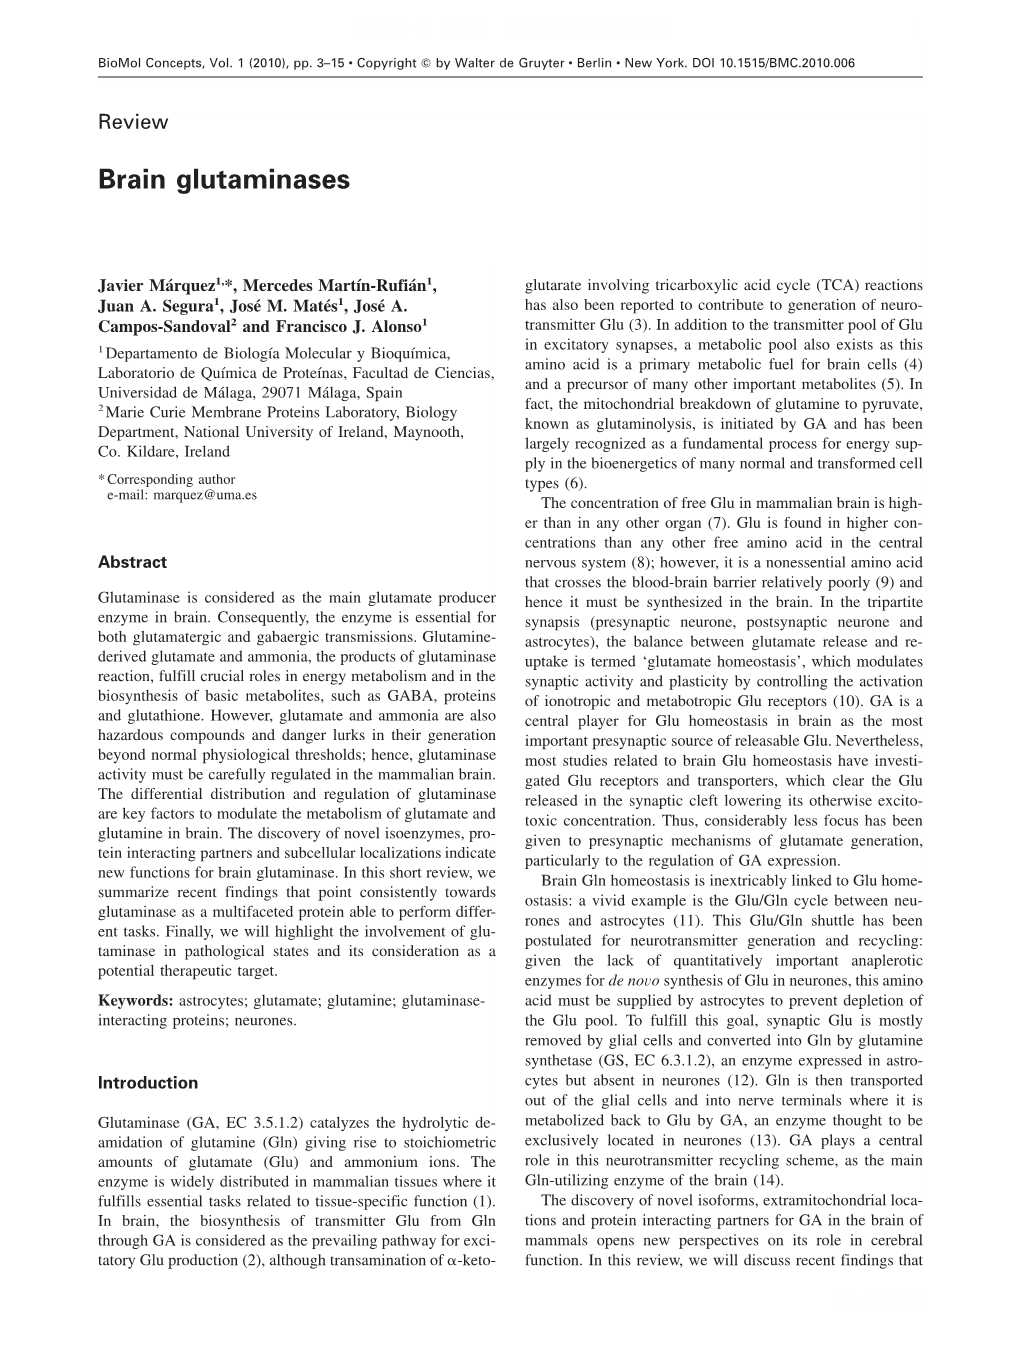 Brain Glutaminases